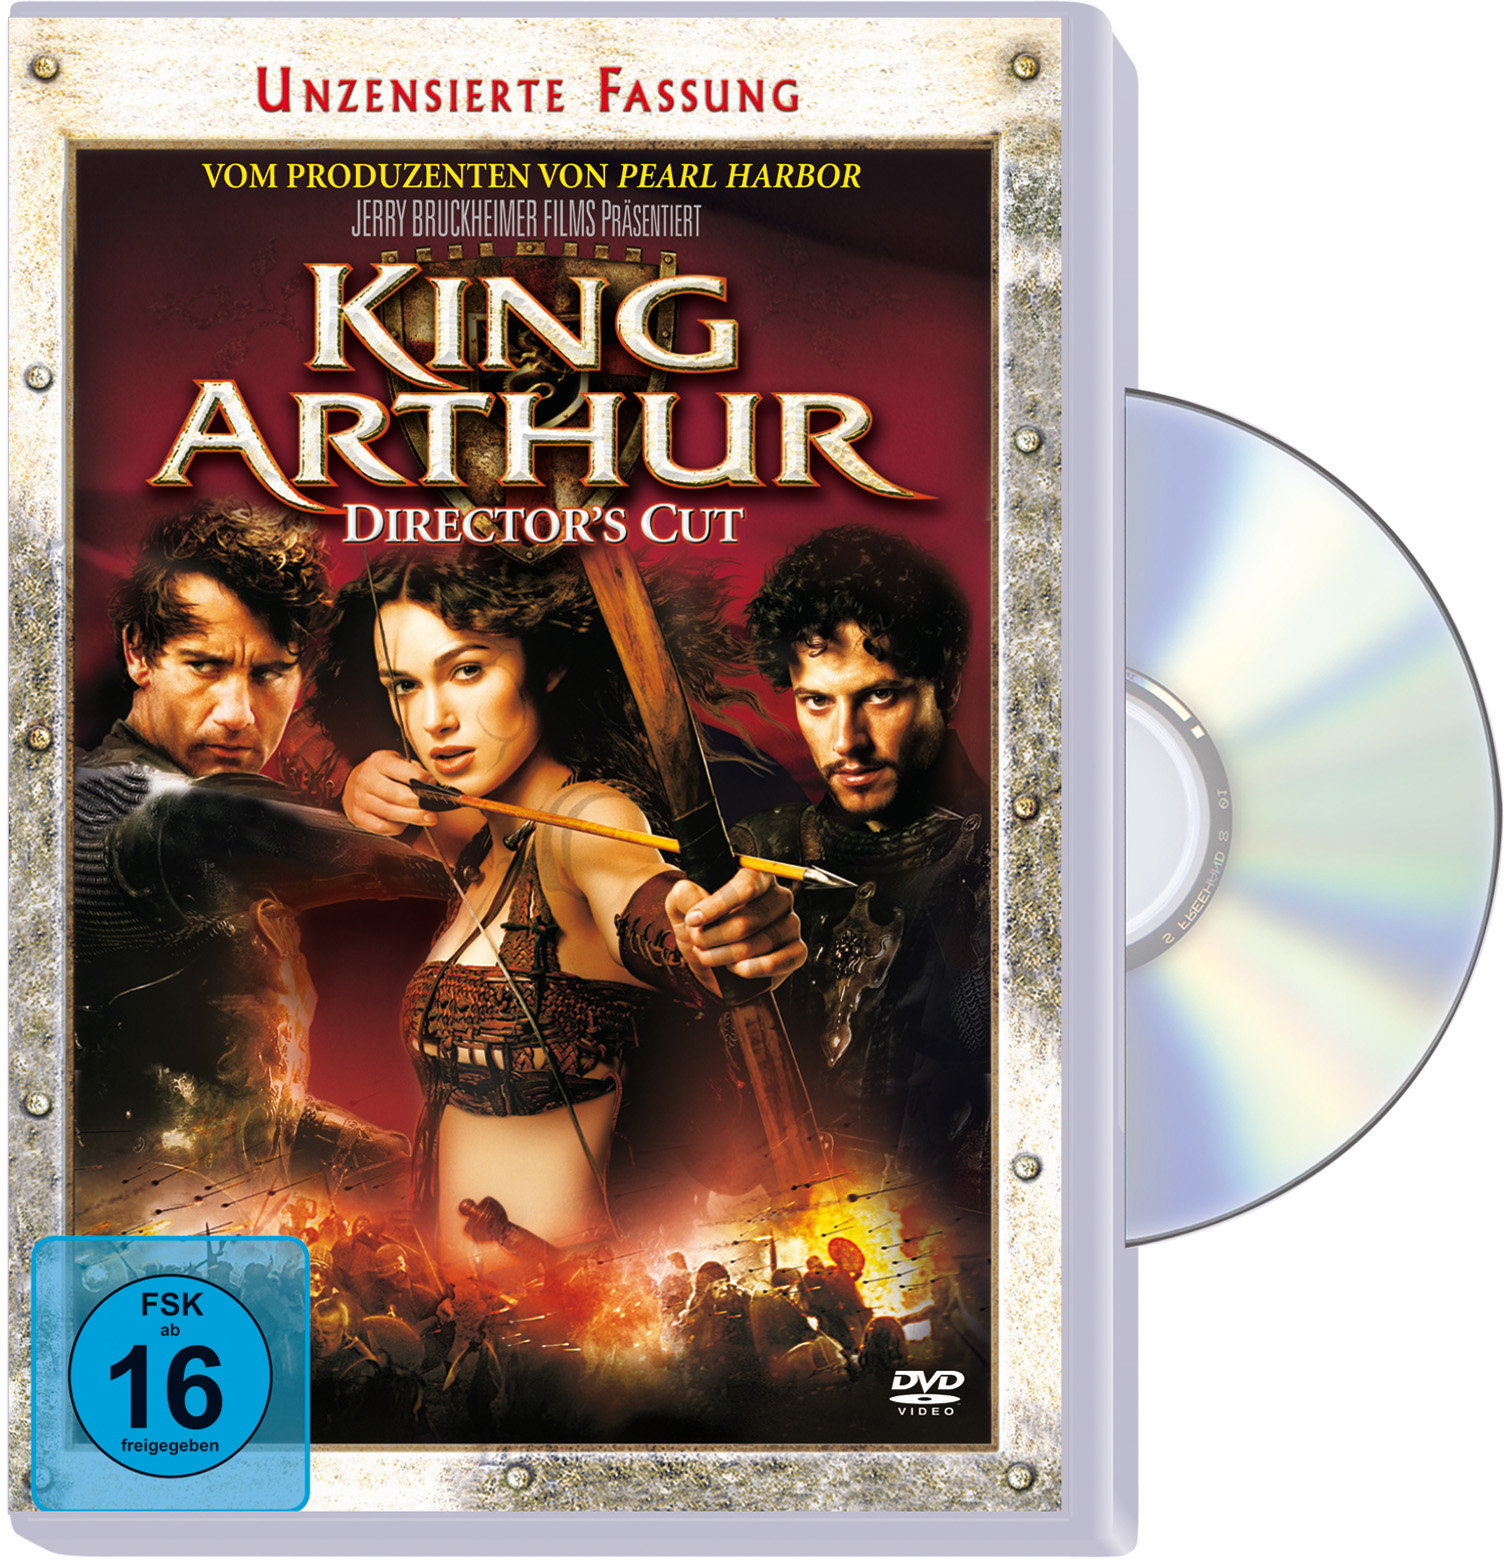 King DVD Cut) (Director’s Arthur